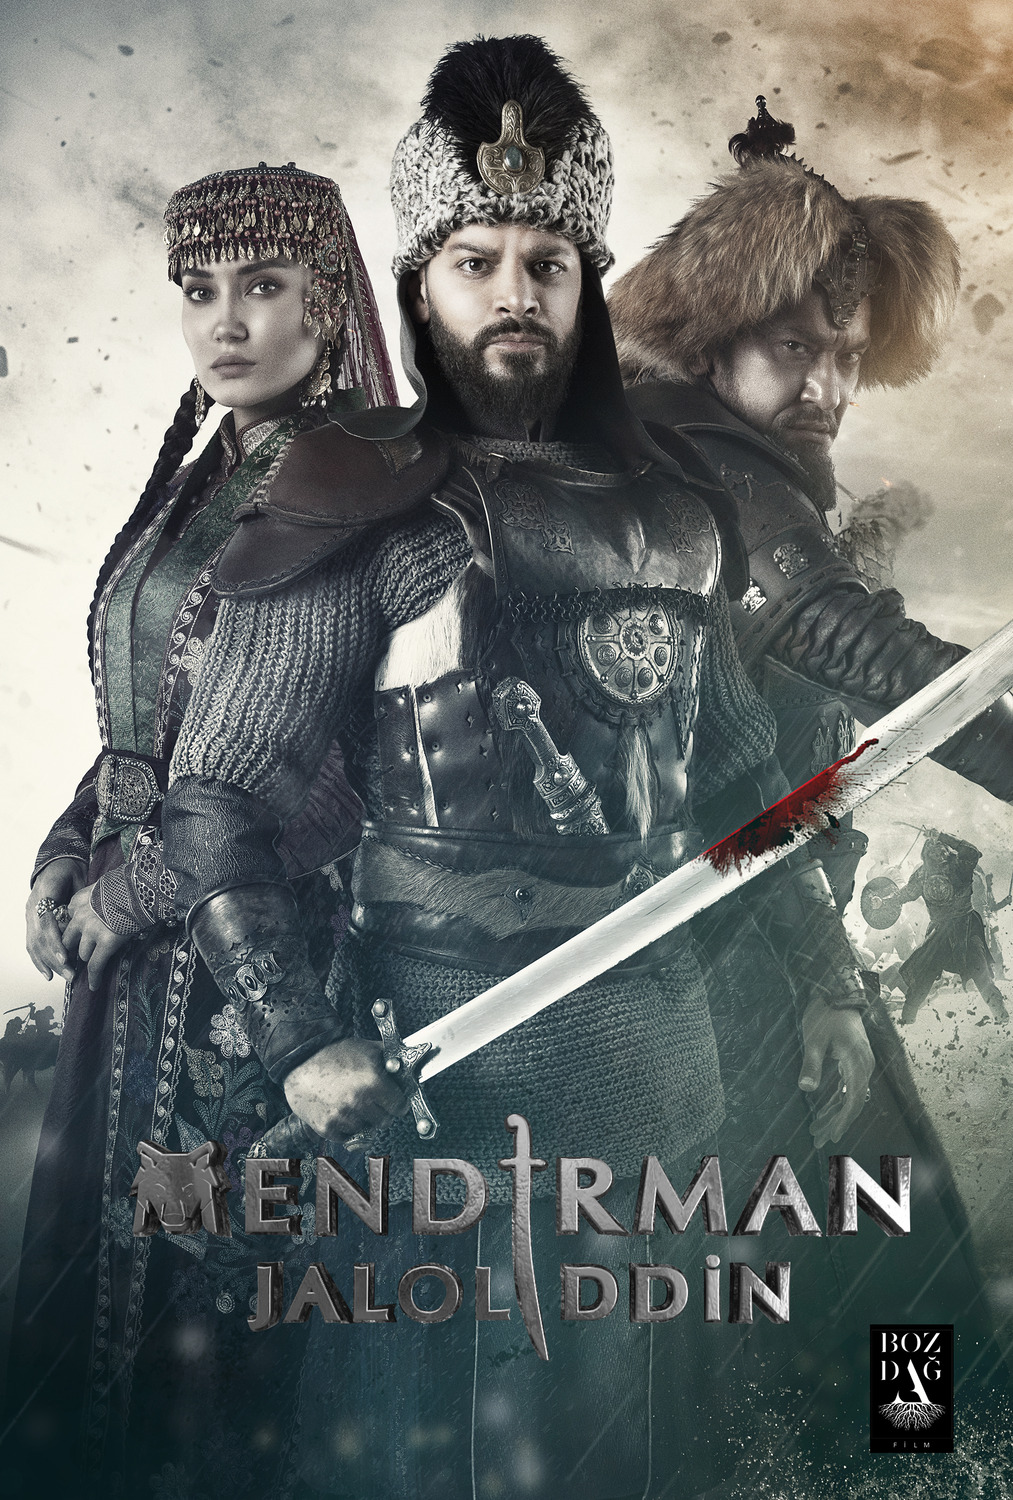 Extra Large TV Poster Image for Mendirman Jaloliddin (#2 of 7)